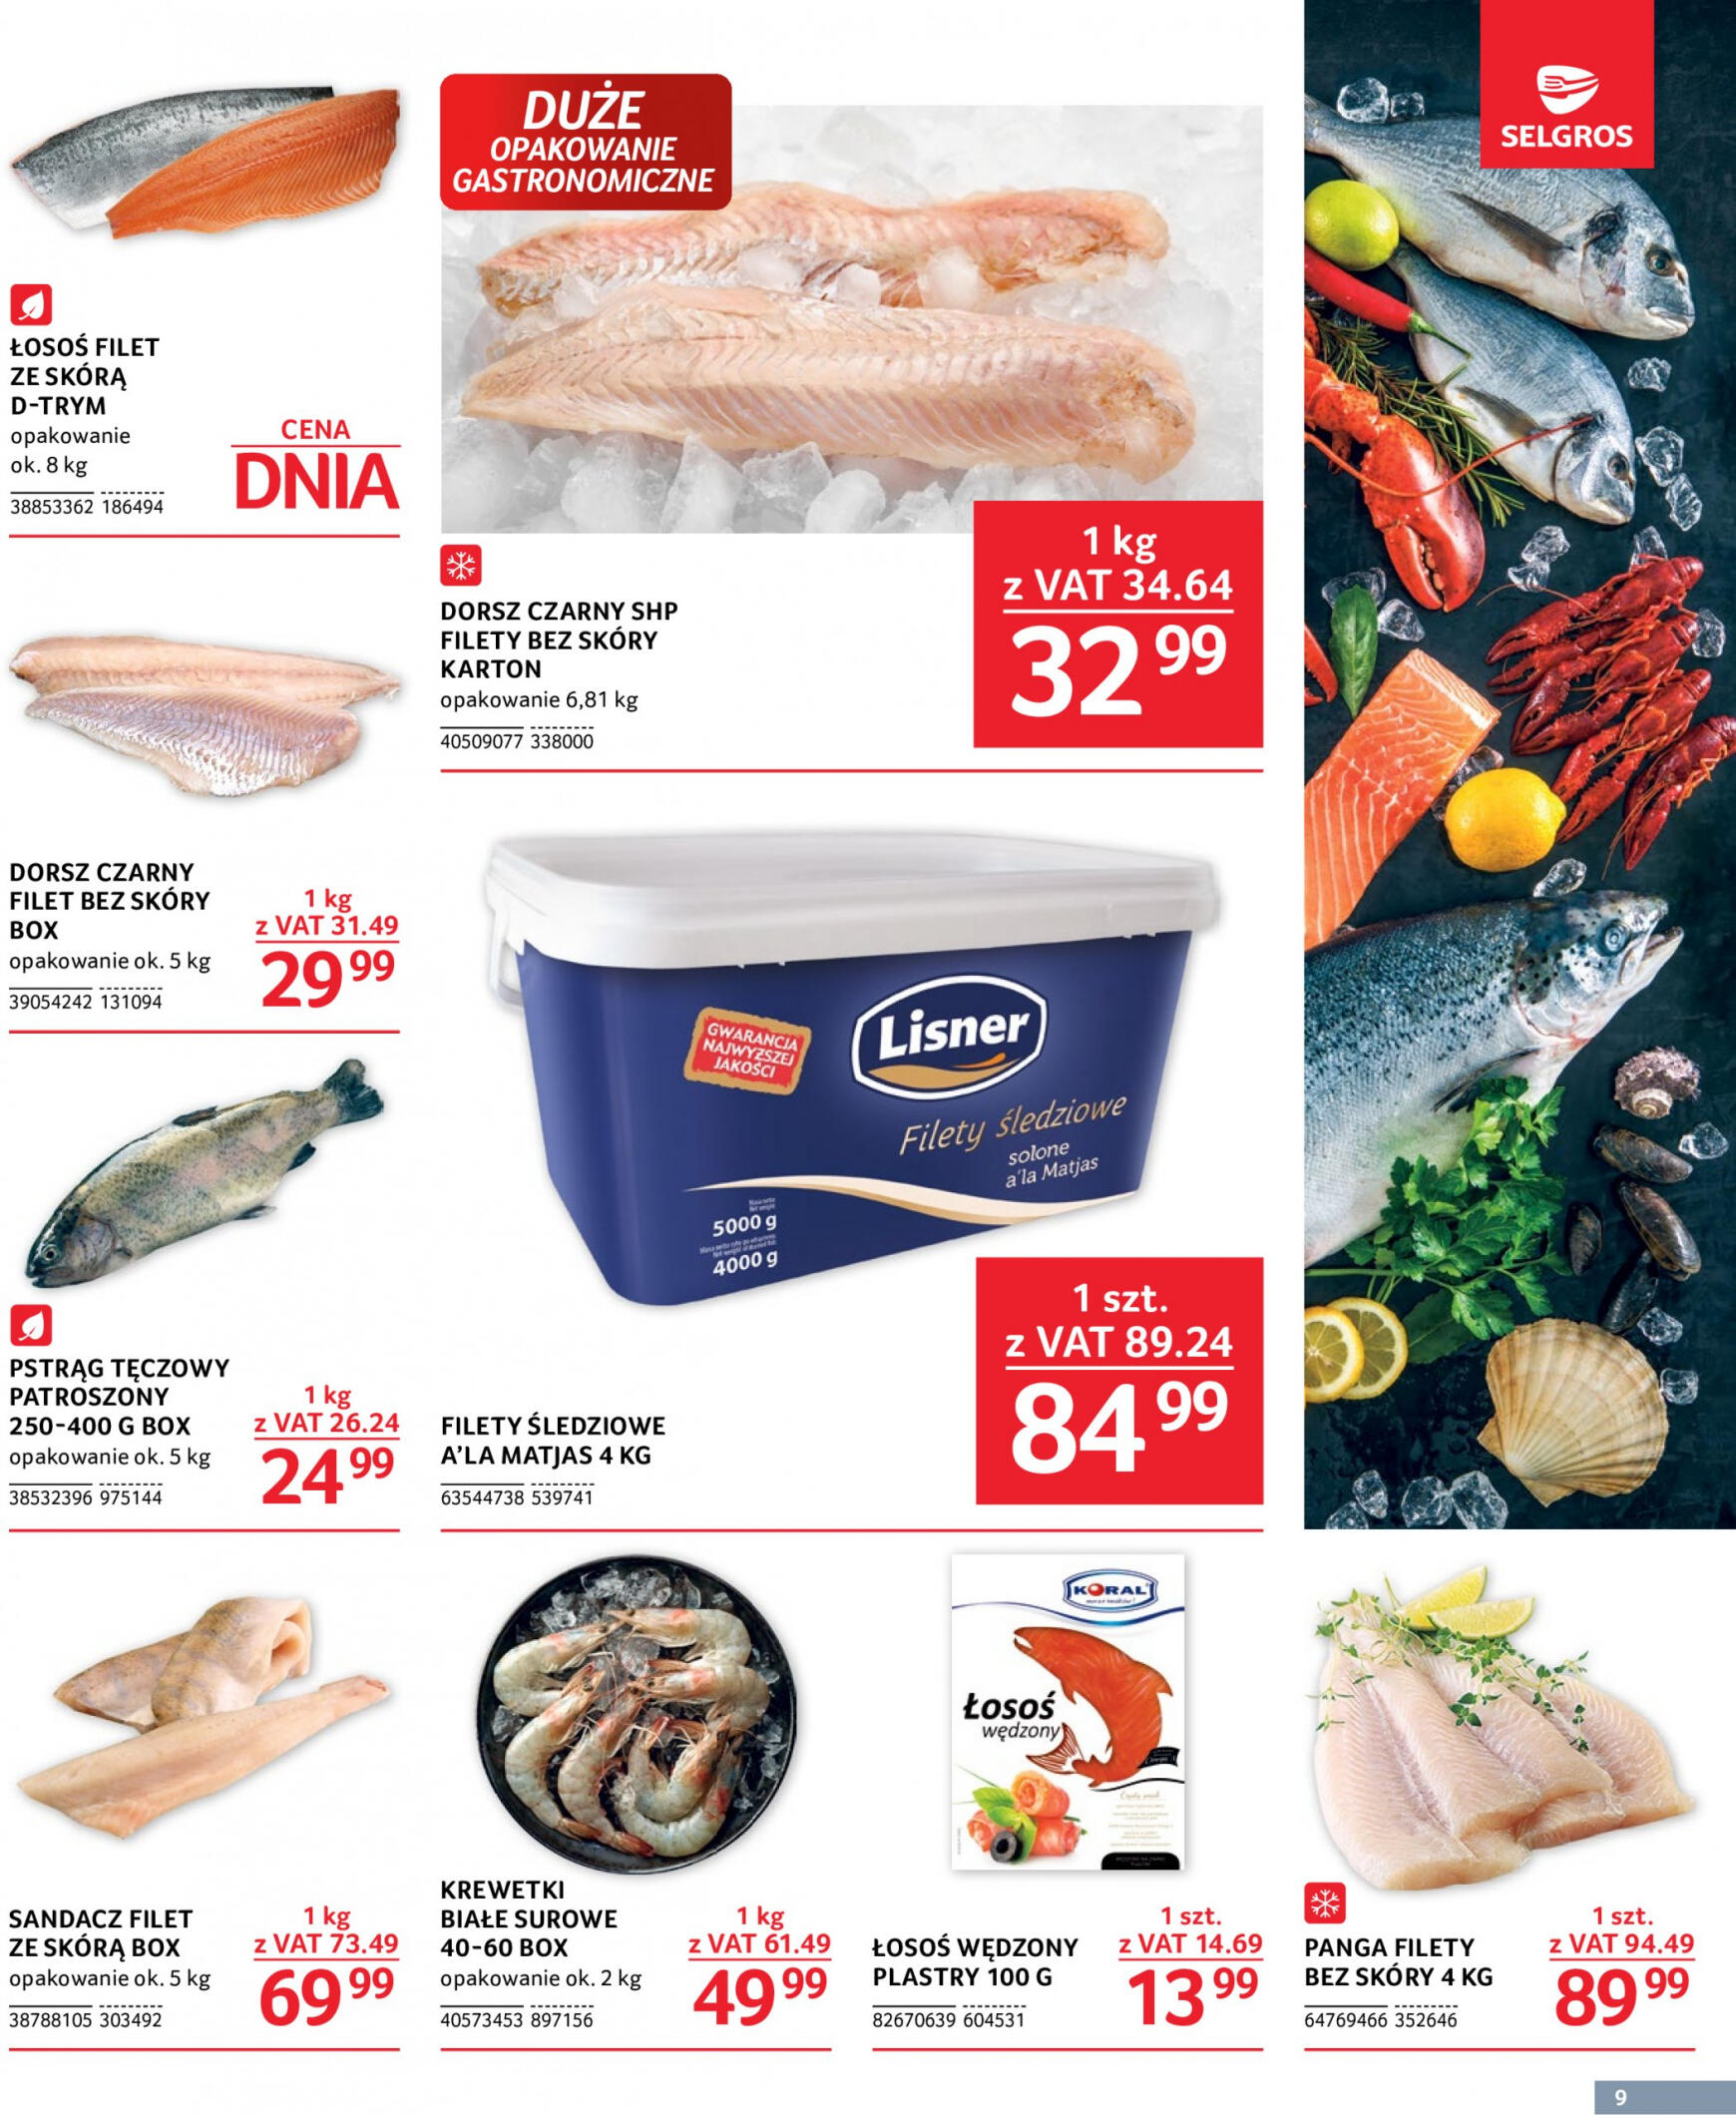 selgros - Selgros cash&carry - Oferta Gastronomia gazetka aktualna ważna od 25.04. - 08.05. - page: 9